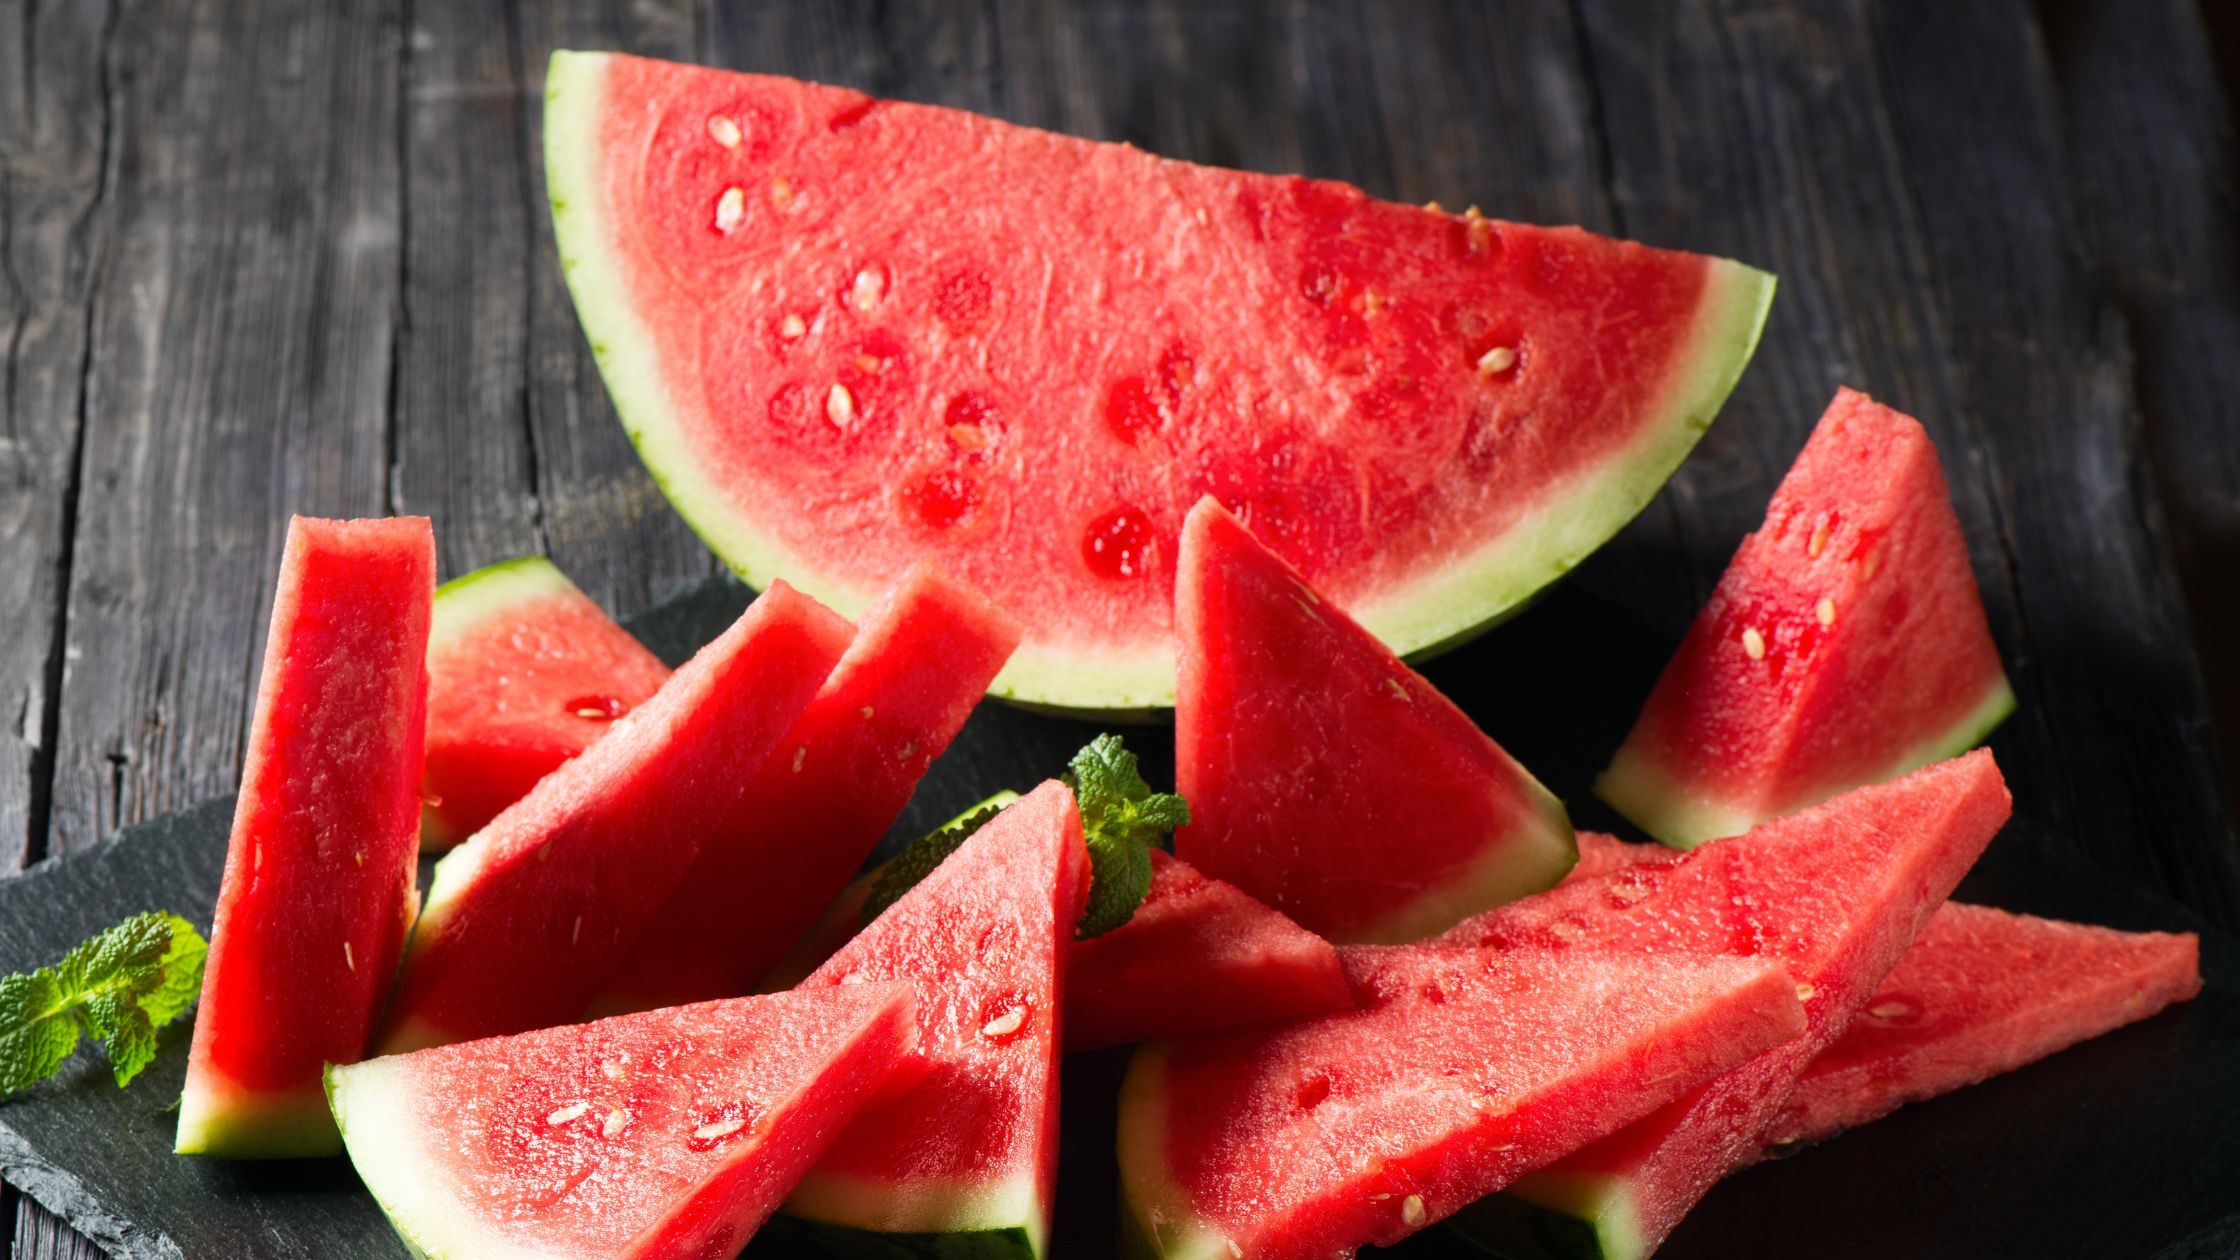  Benefits of Watermelon